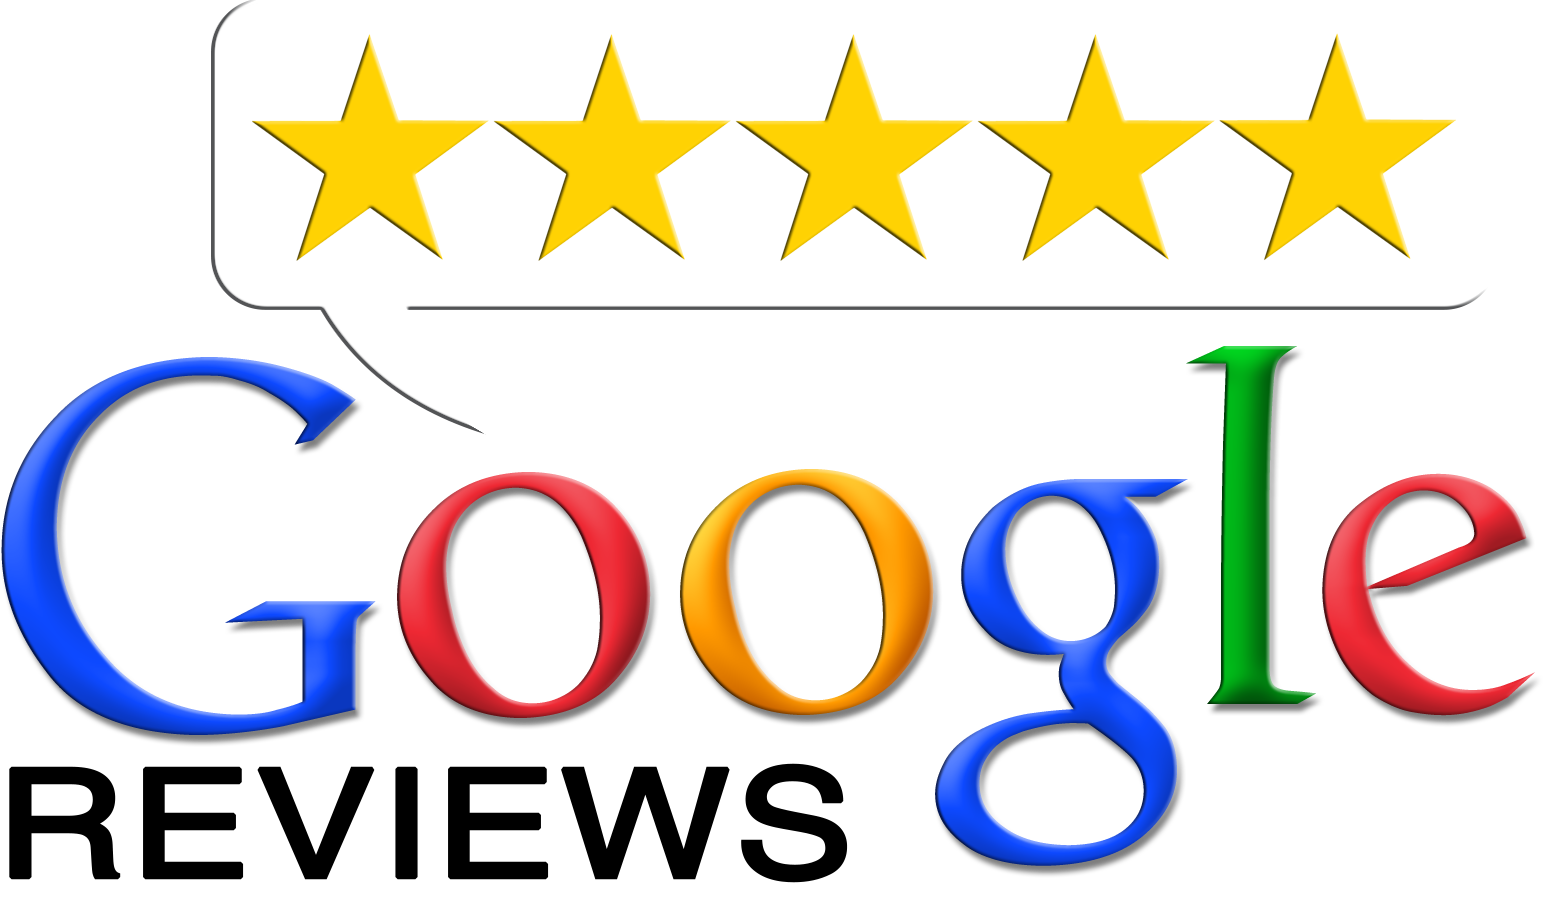 5-star-google-reviews